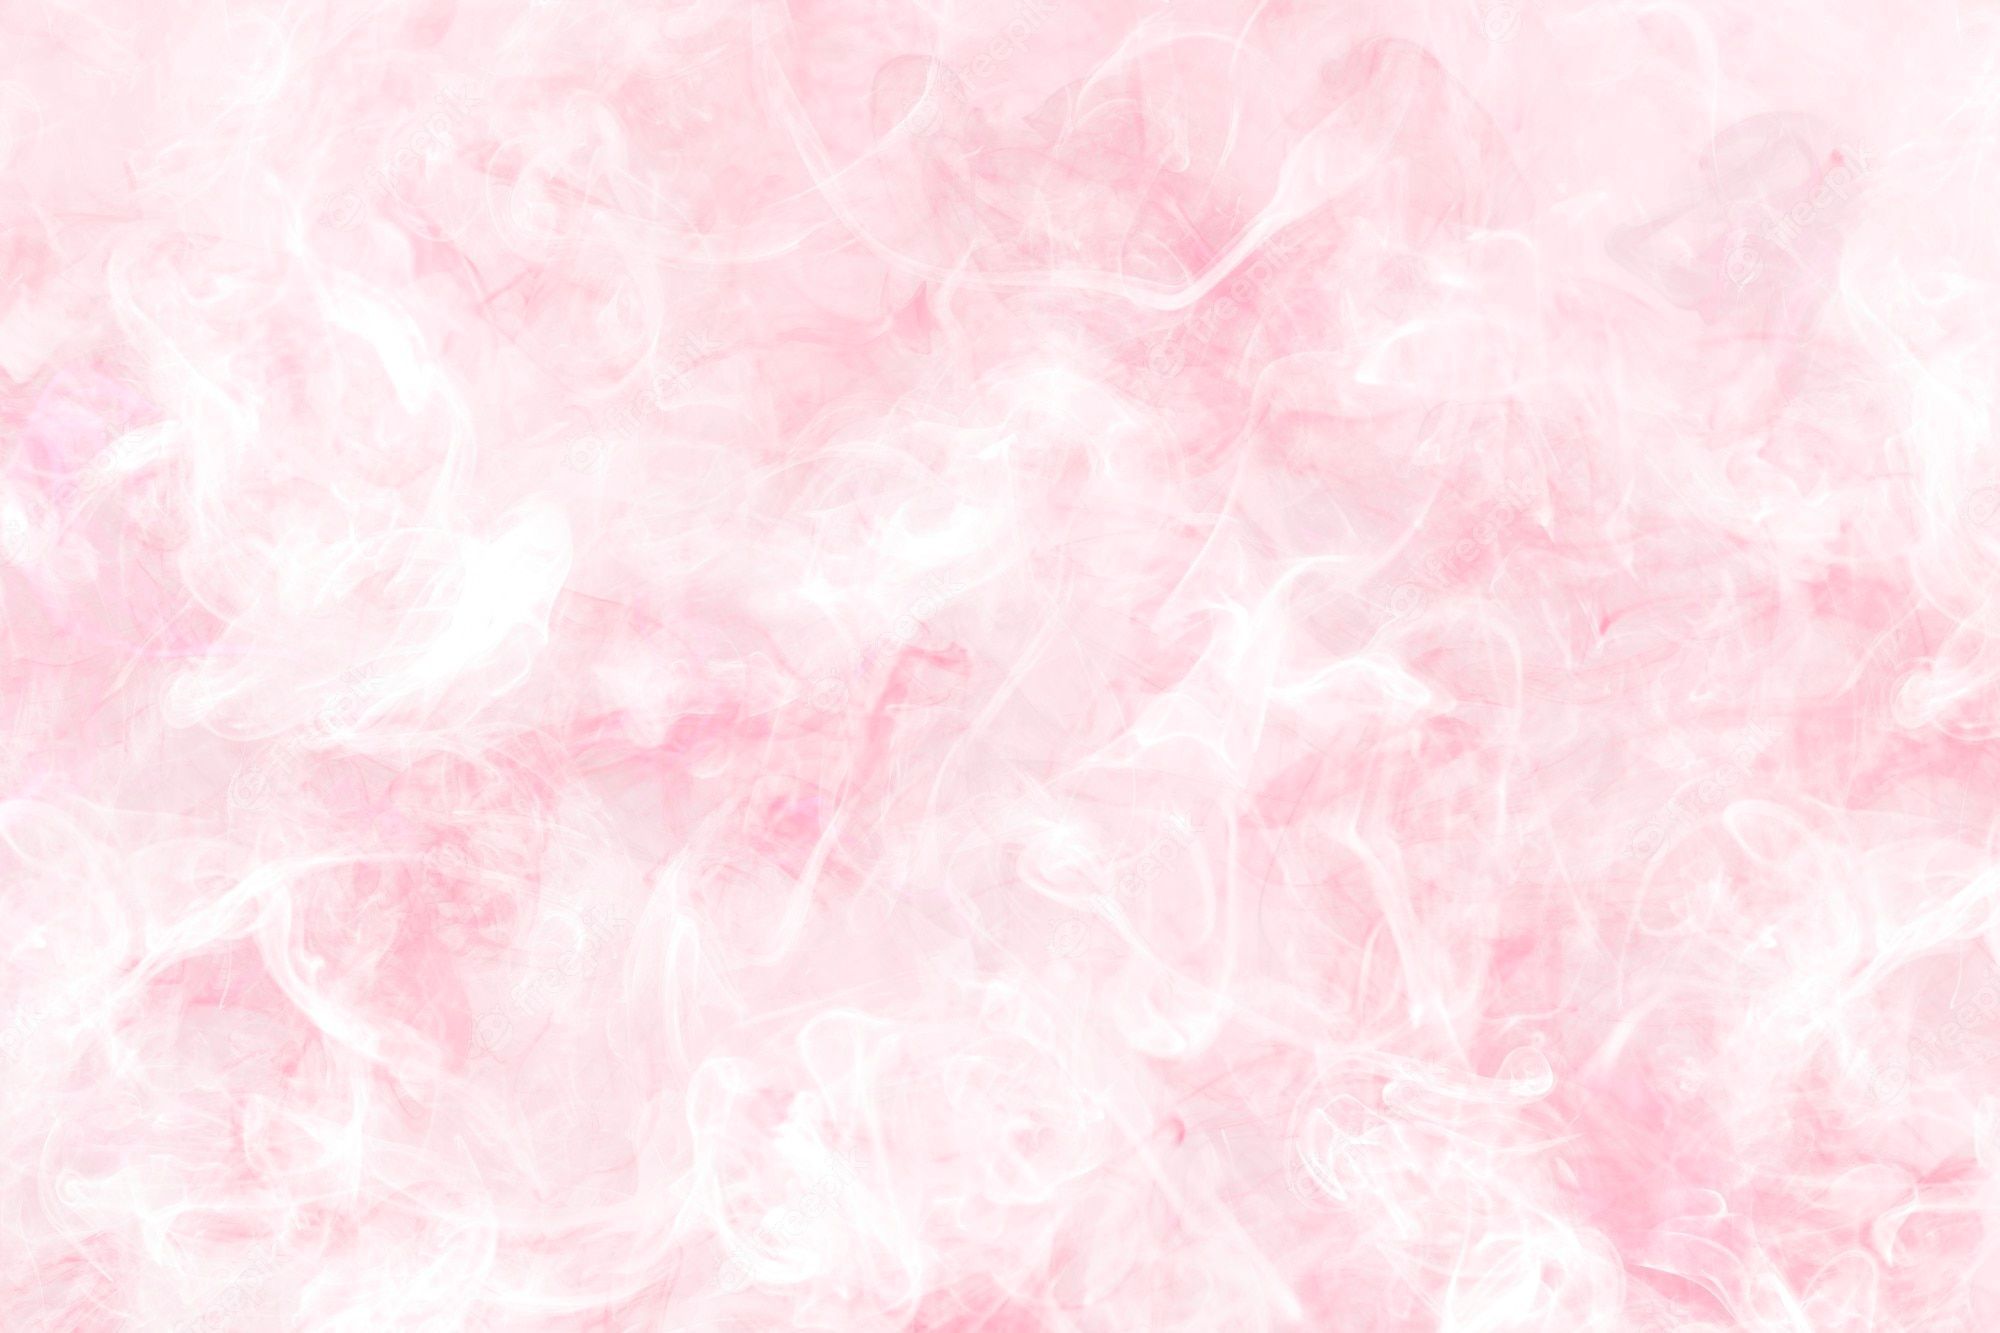 A pink smoke pattern on white background - Pink, hot pink